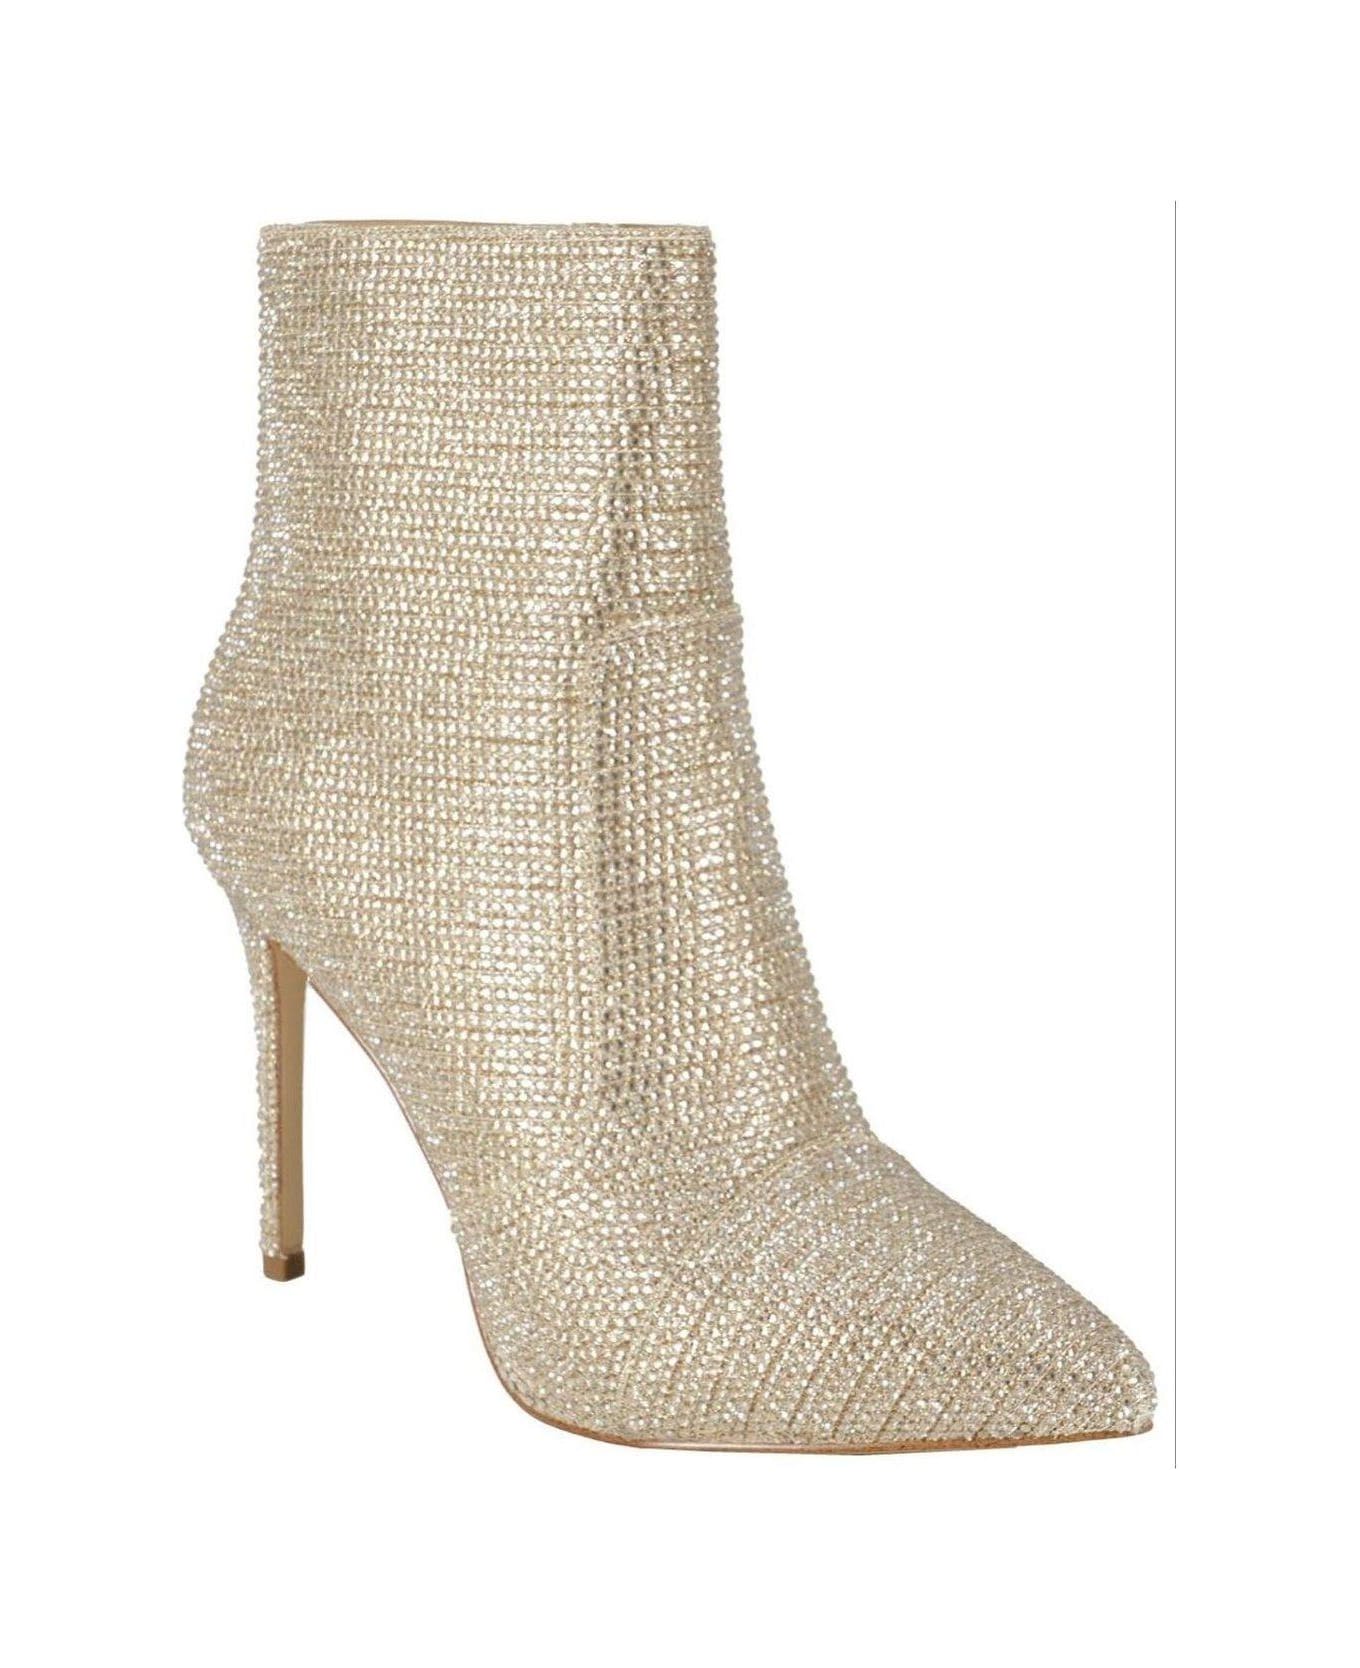 Michael Kors Rue Glitter Embellished Heeled Ankle Boots - Pale Gold